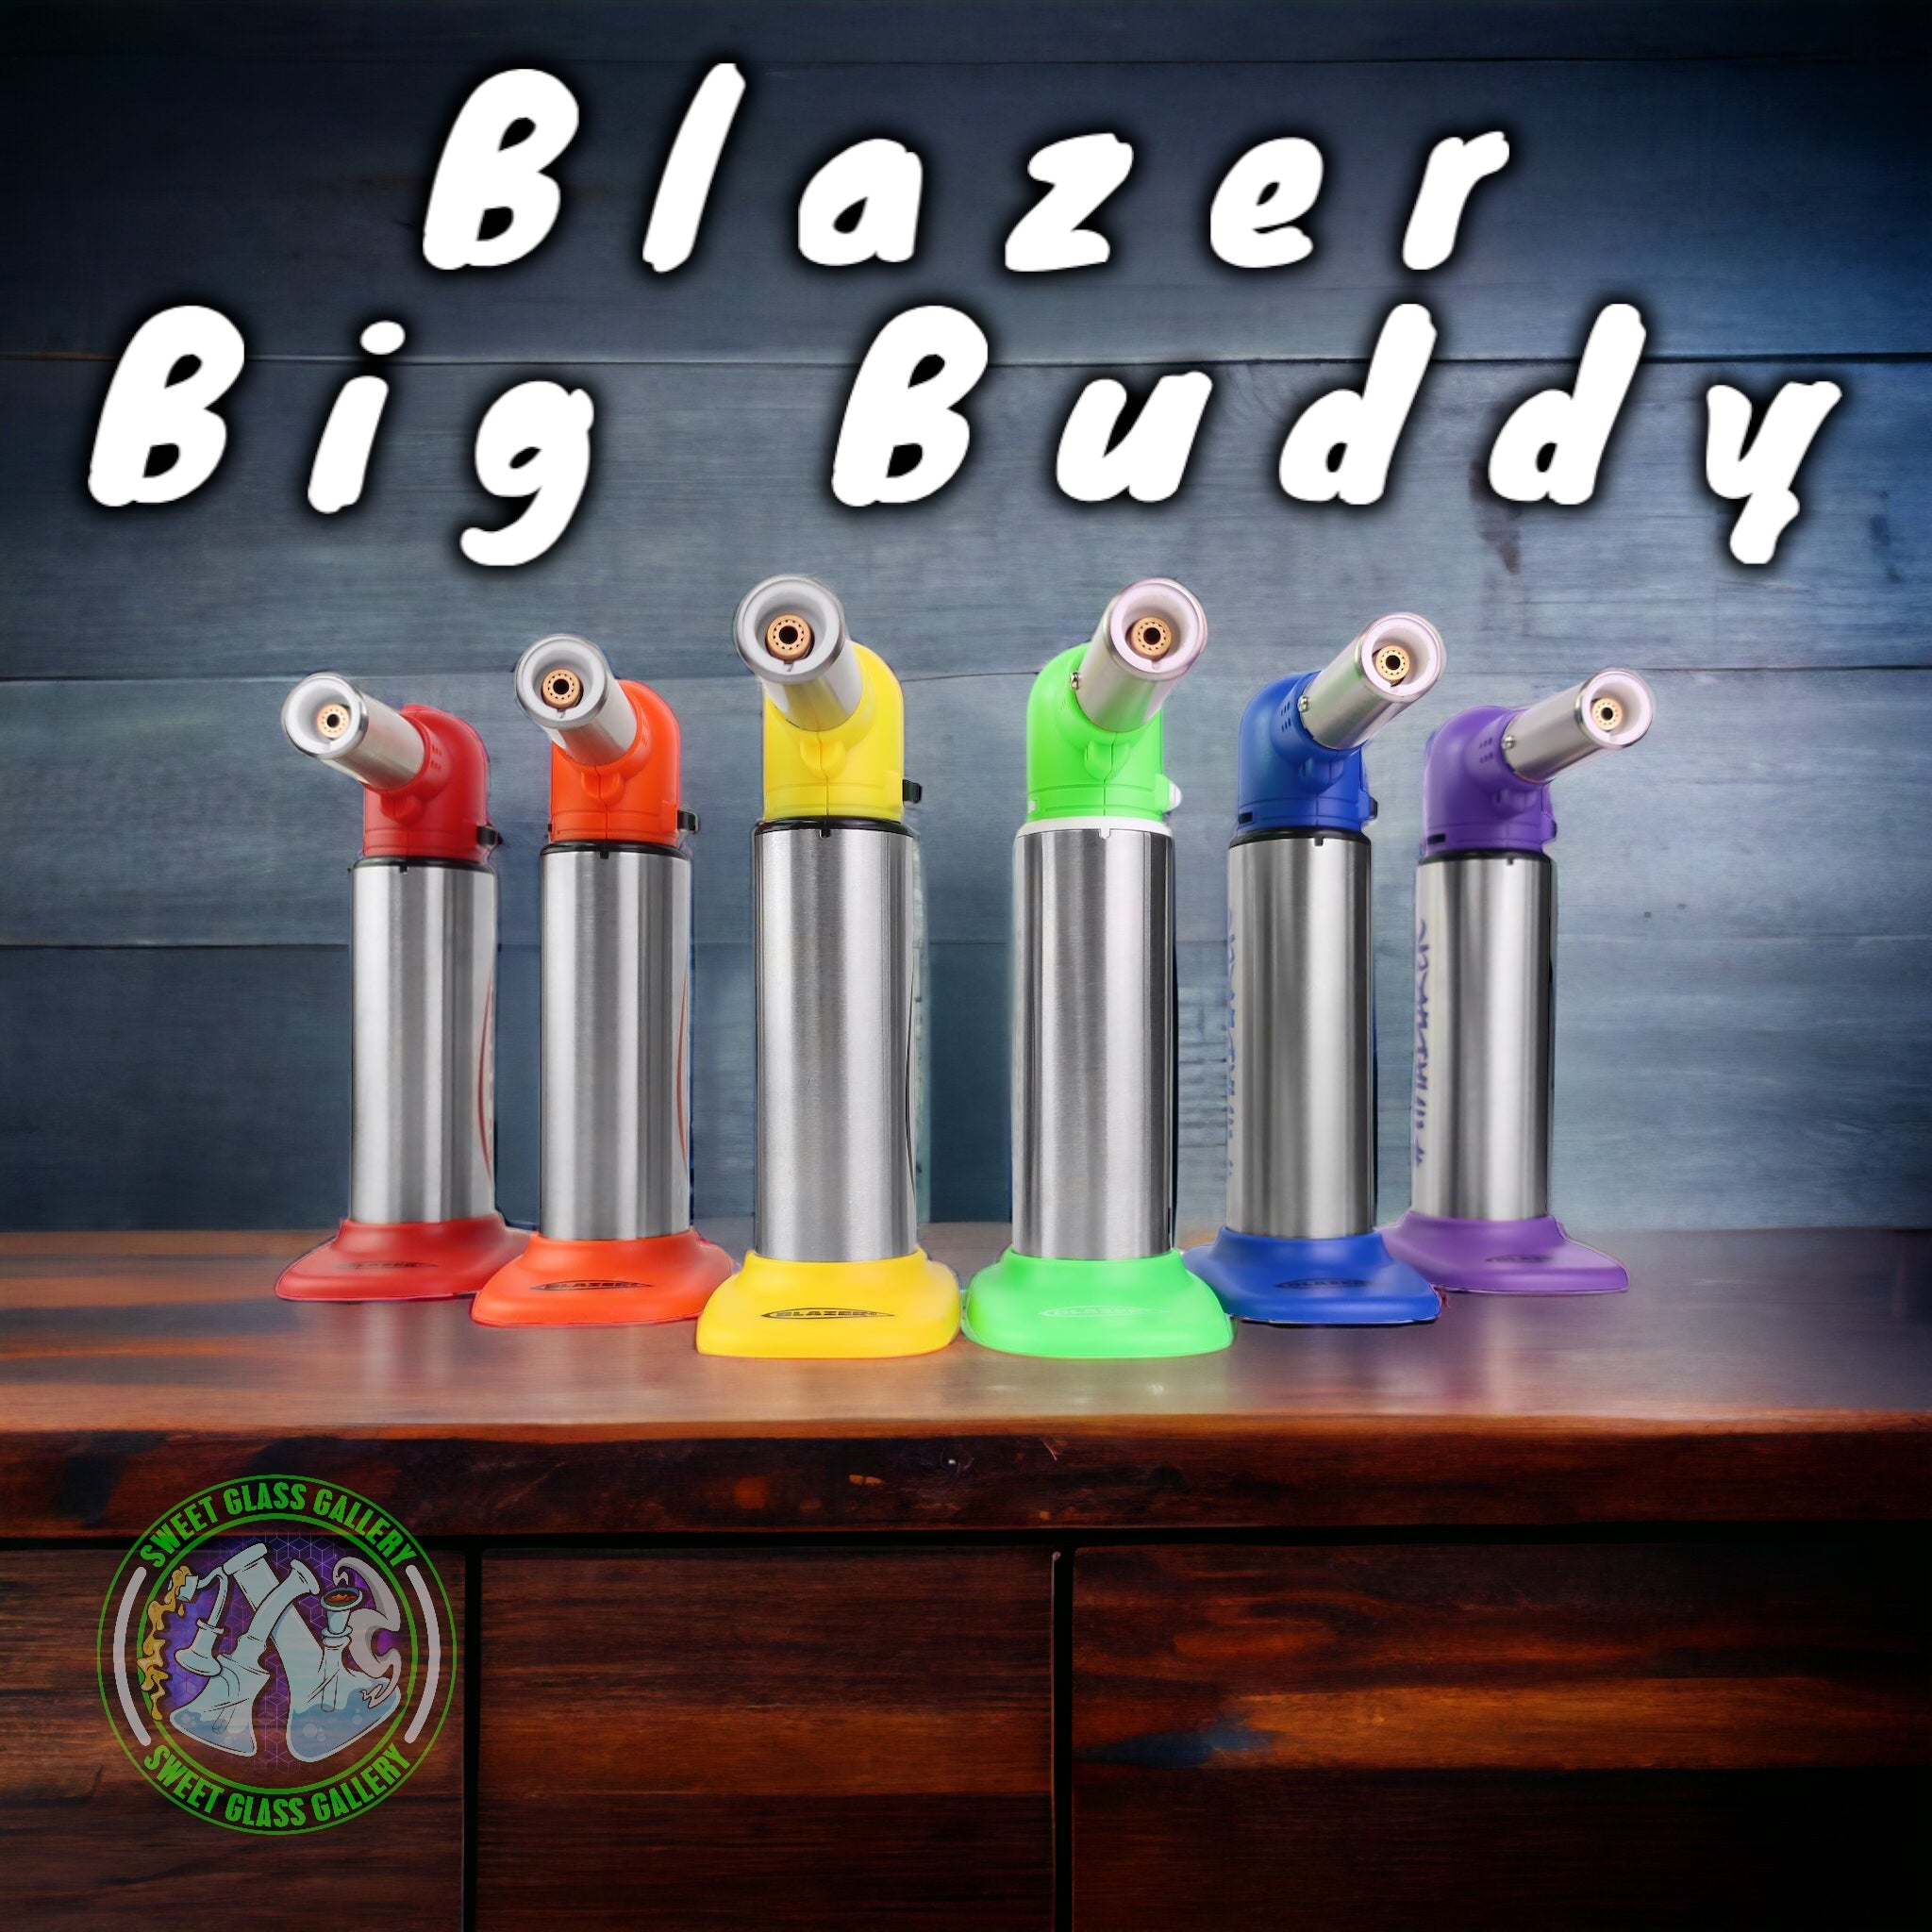 Blazer - Big Buddy Torch